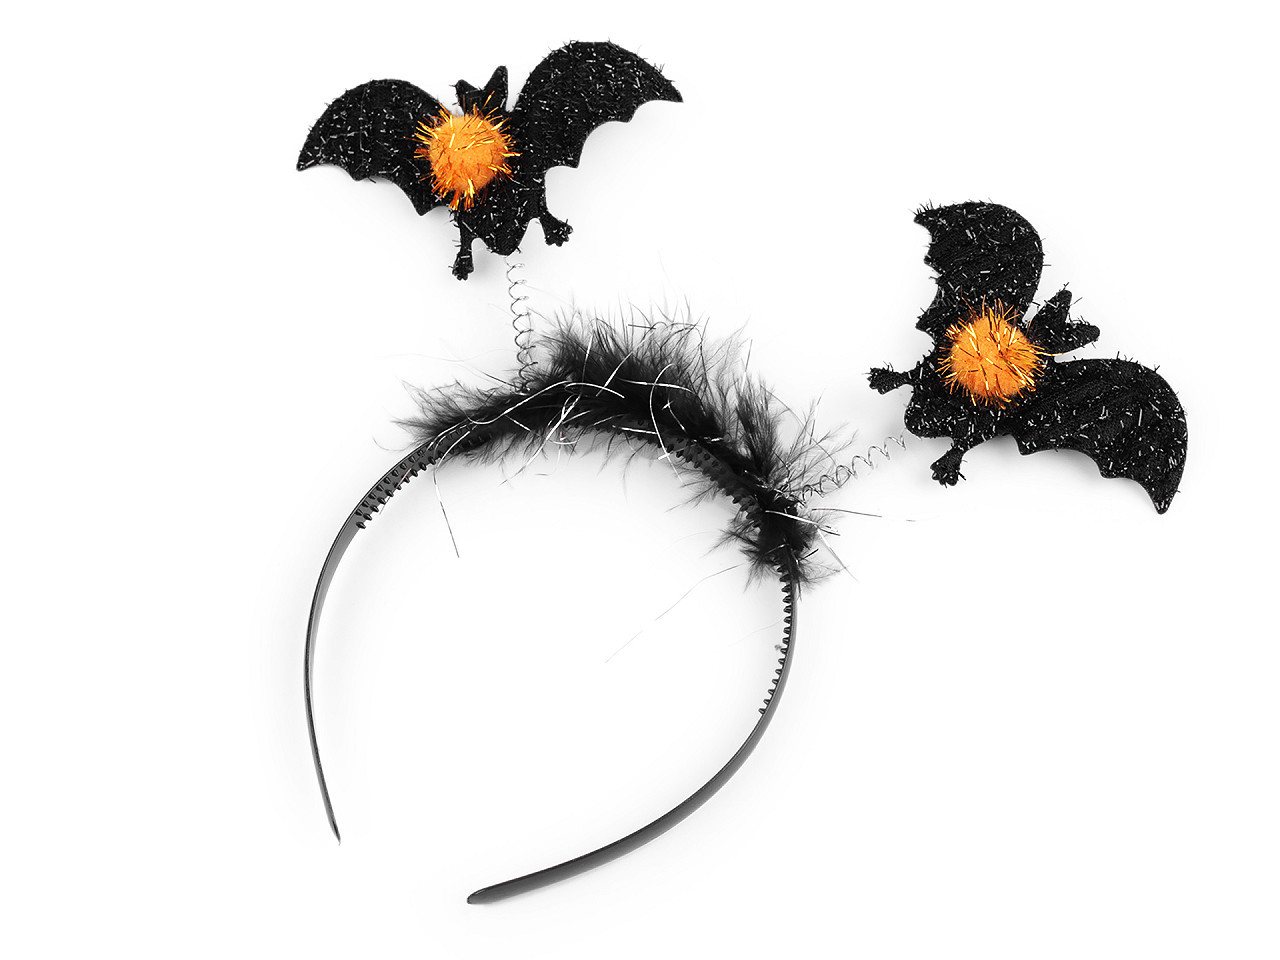 Čelenka do vlasů - Halloween, čarodějnice, barva 1 černá netopýr